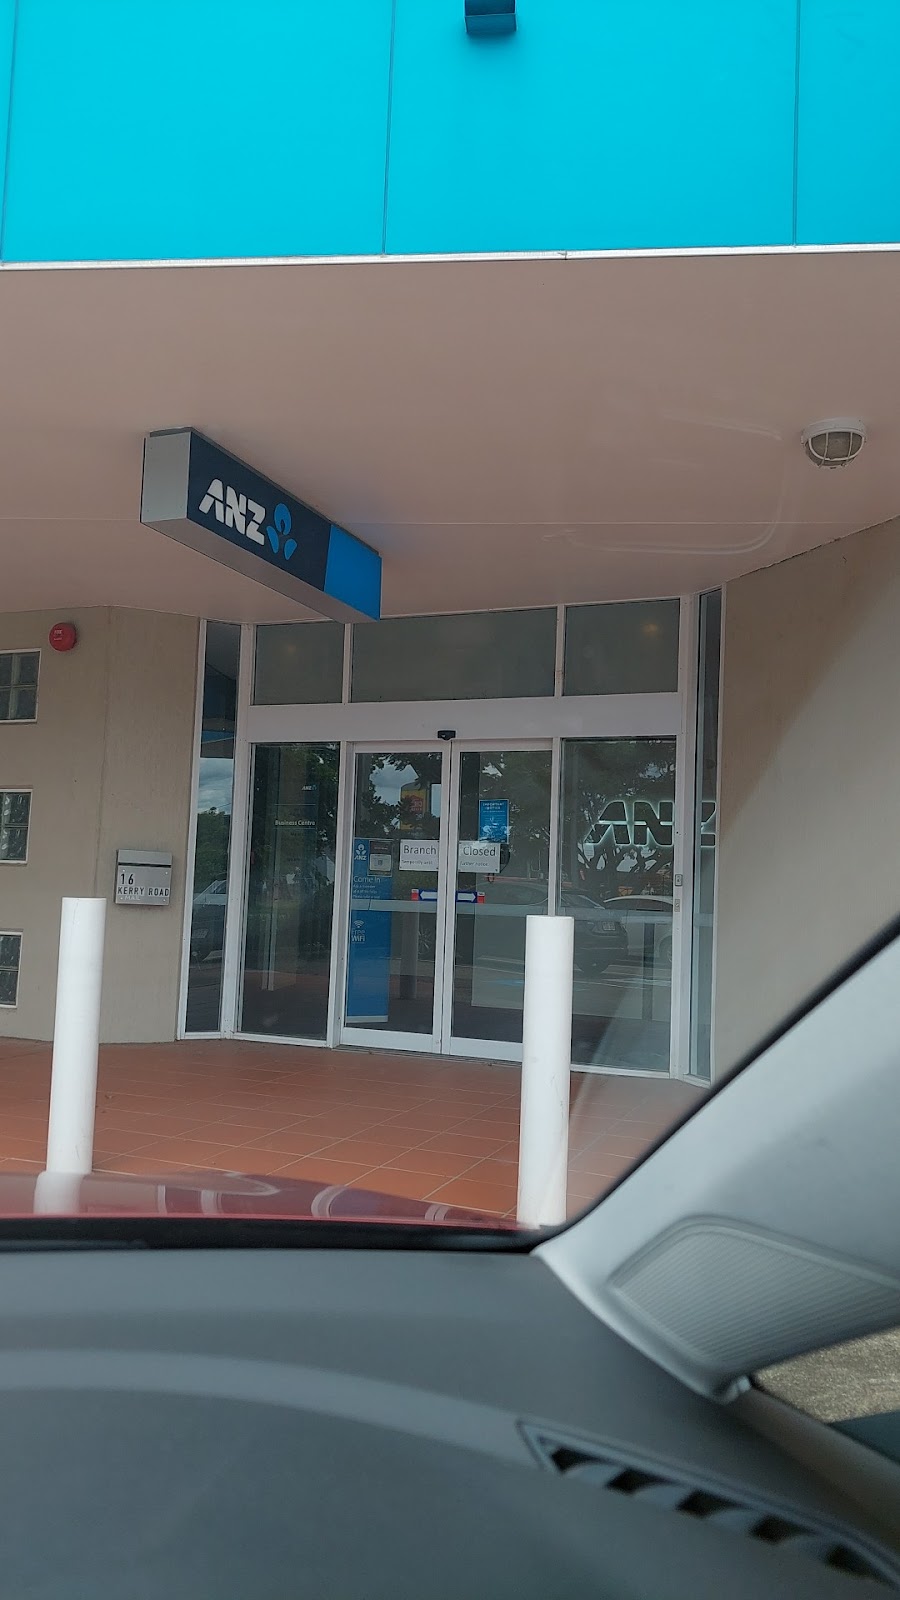 ANZ Branch | bank | 16 Kerry Rd, Acacia Ridge QLD 4110, Australia | 131314 OR +61 131314